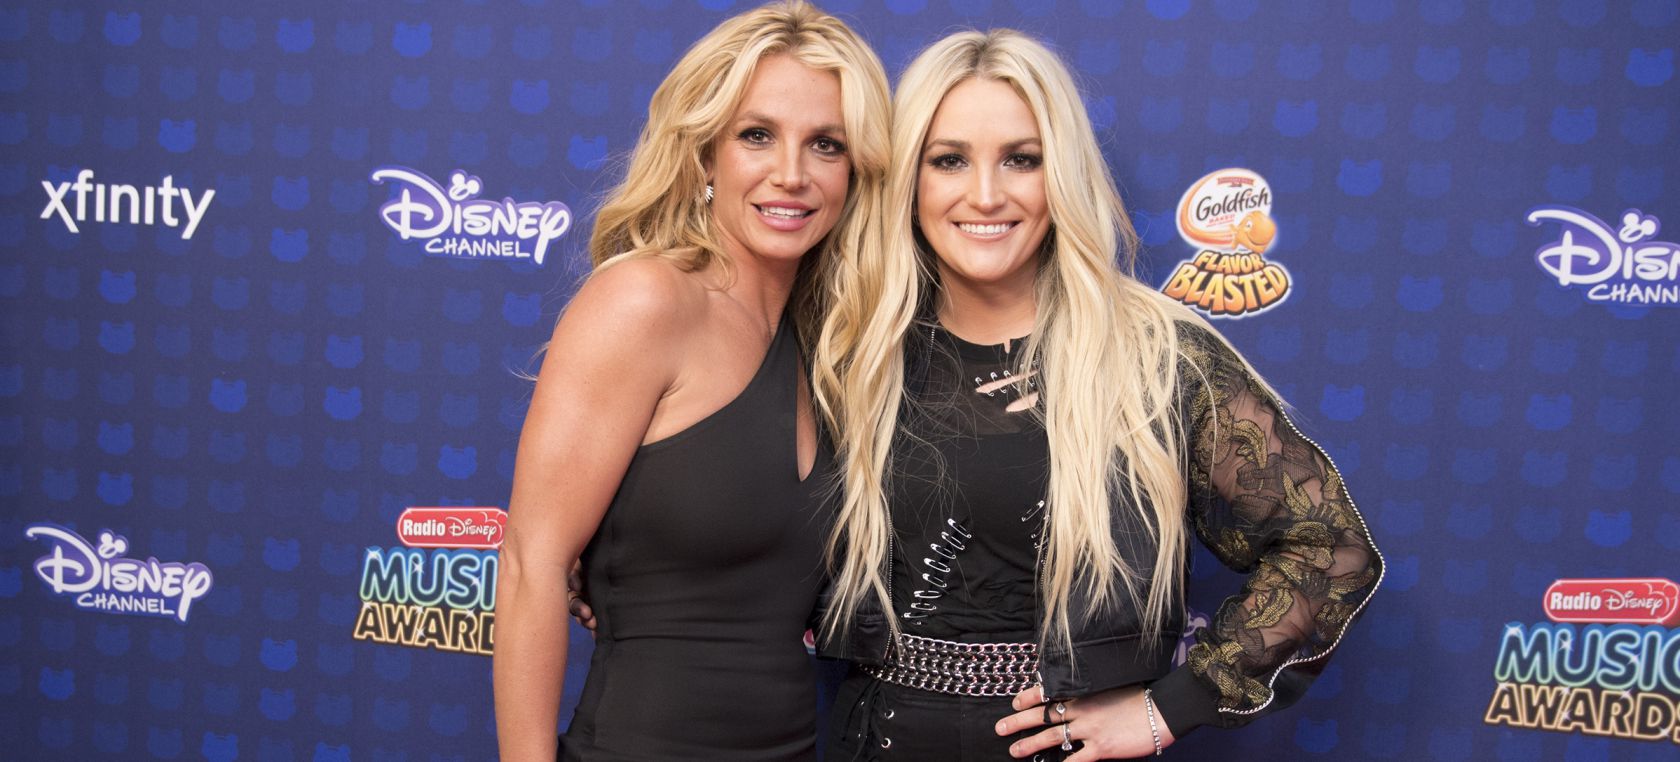 Jamie Lynn Spears se derrumba al hablar de su hermana Britney Spears: “El amor sigue ahí”